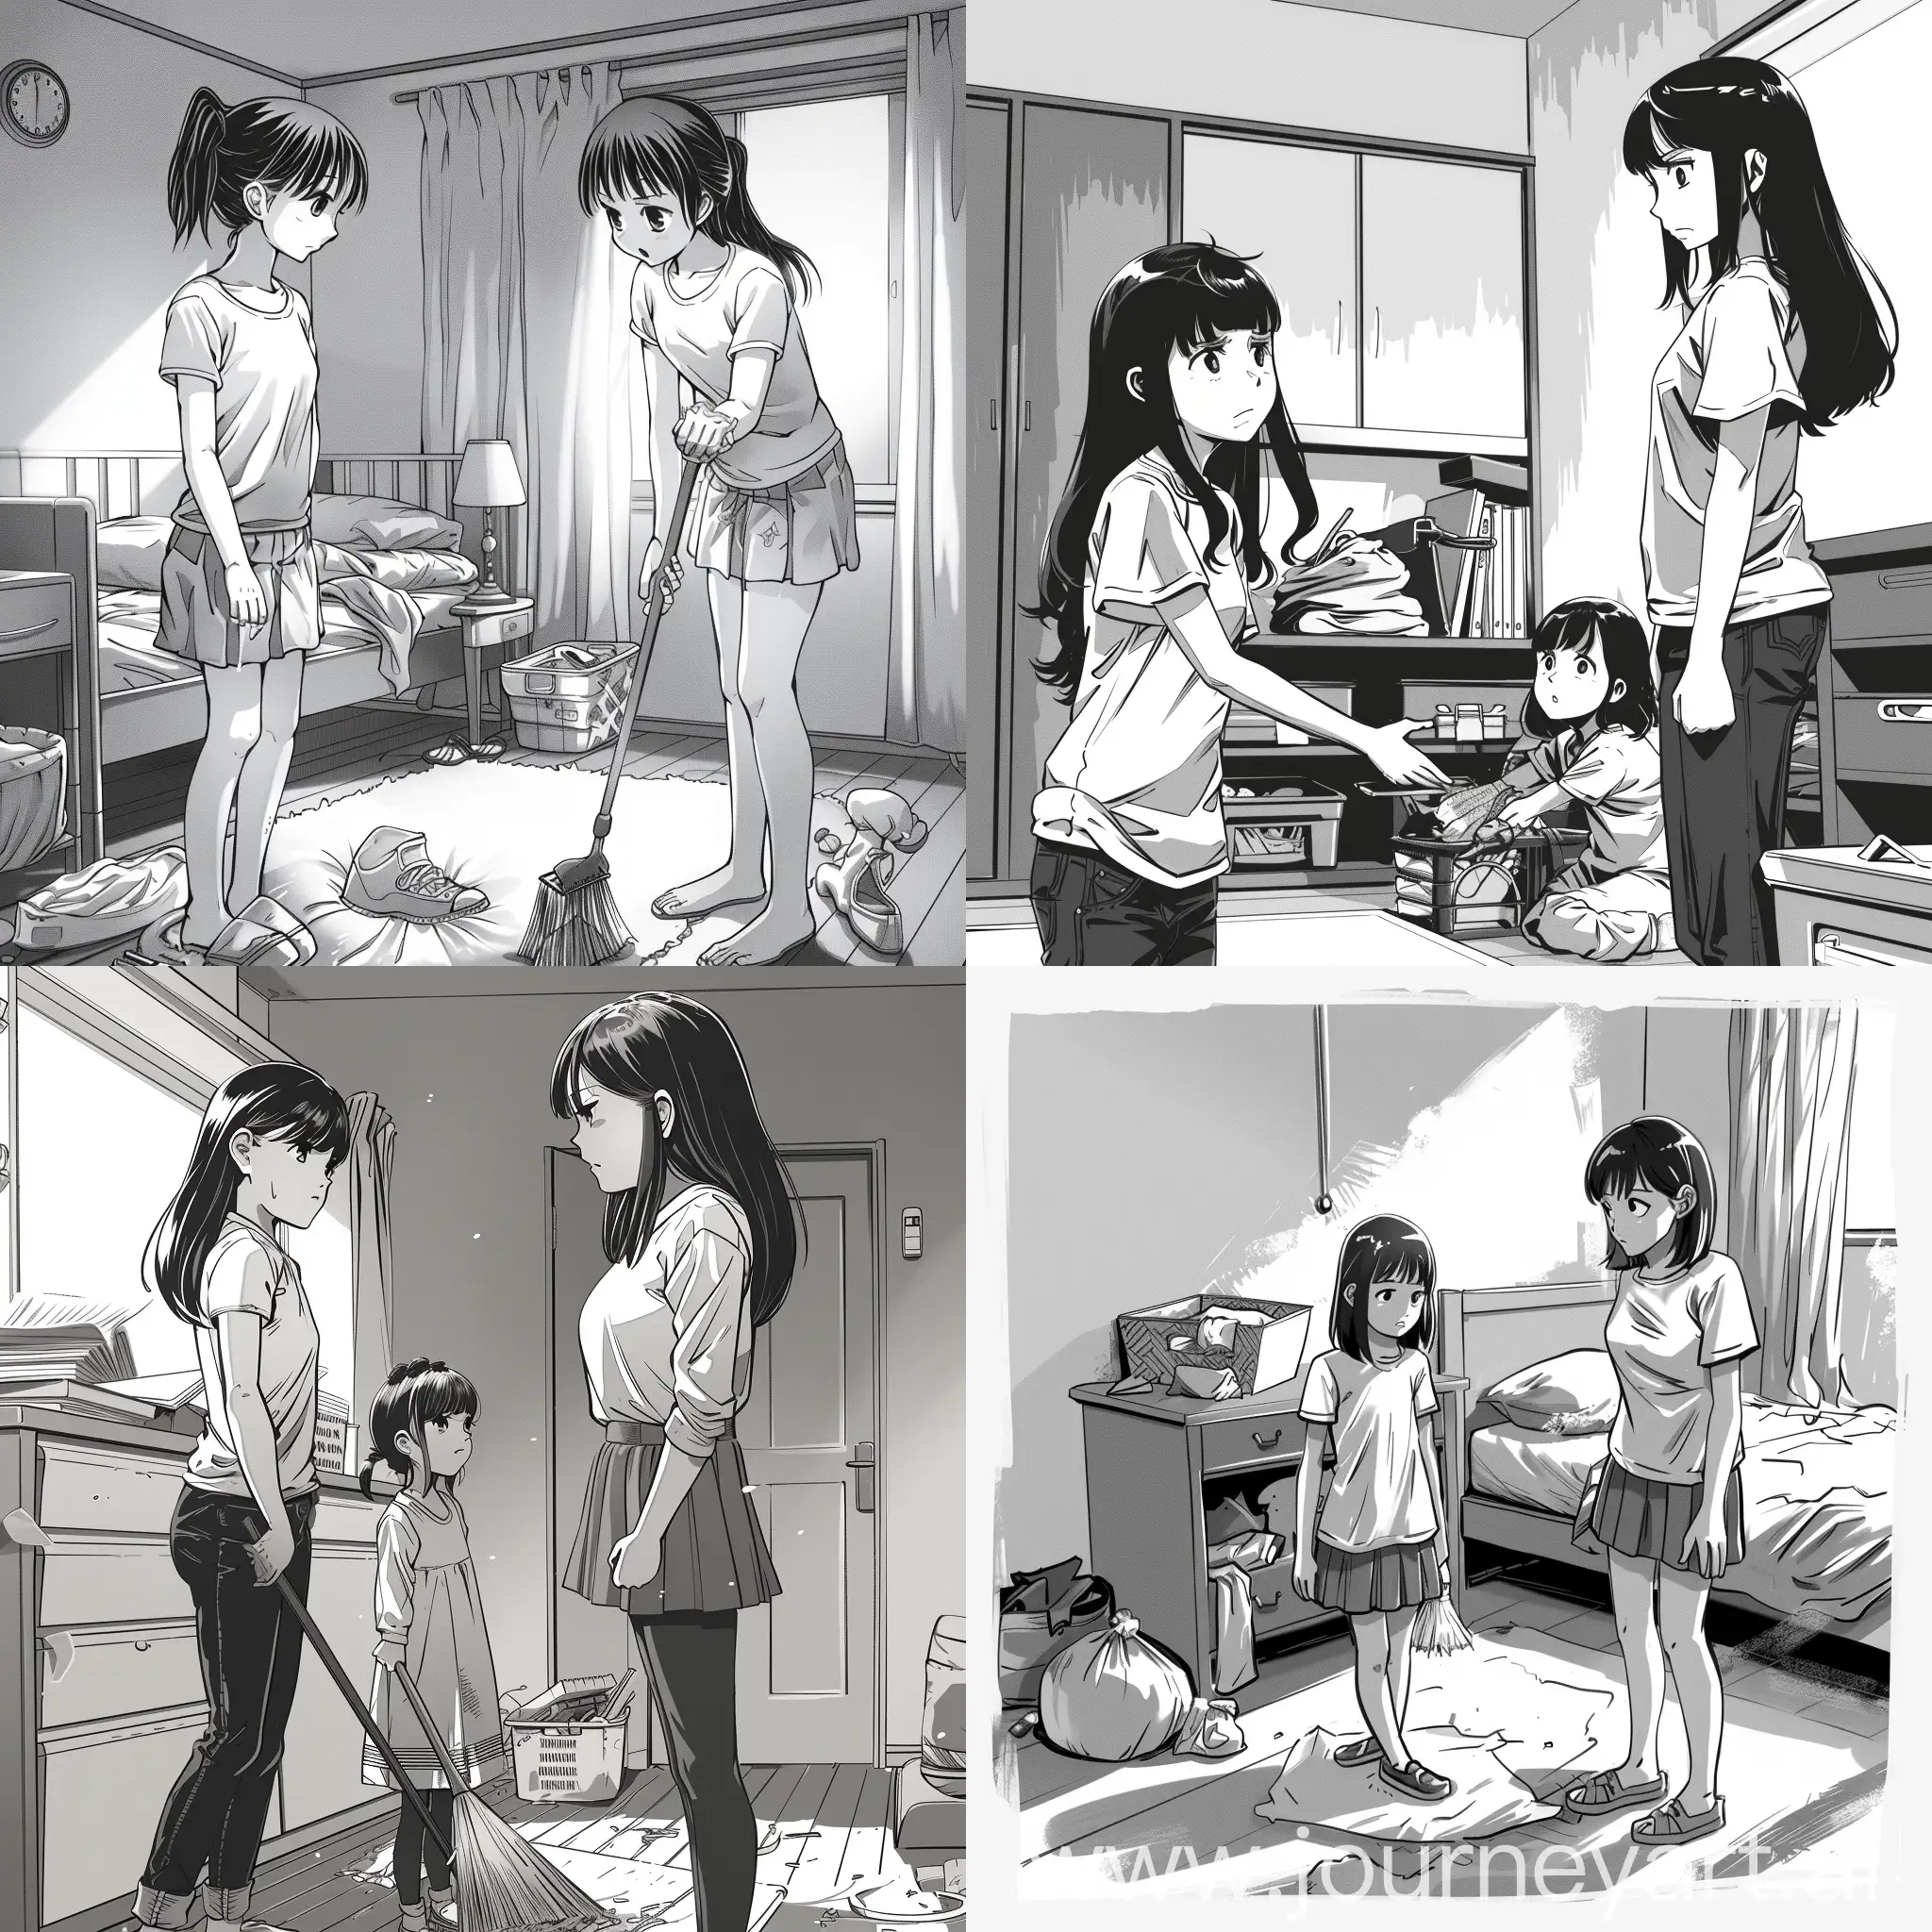 une image style manga où une mère ordonne à sa fille de ranger sa chambre